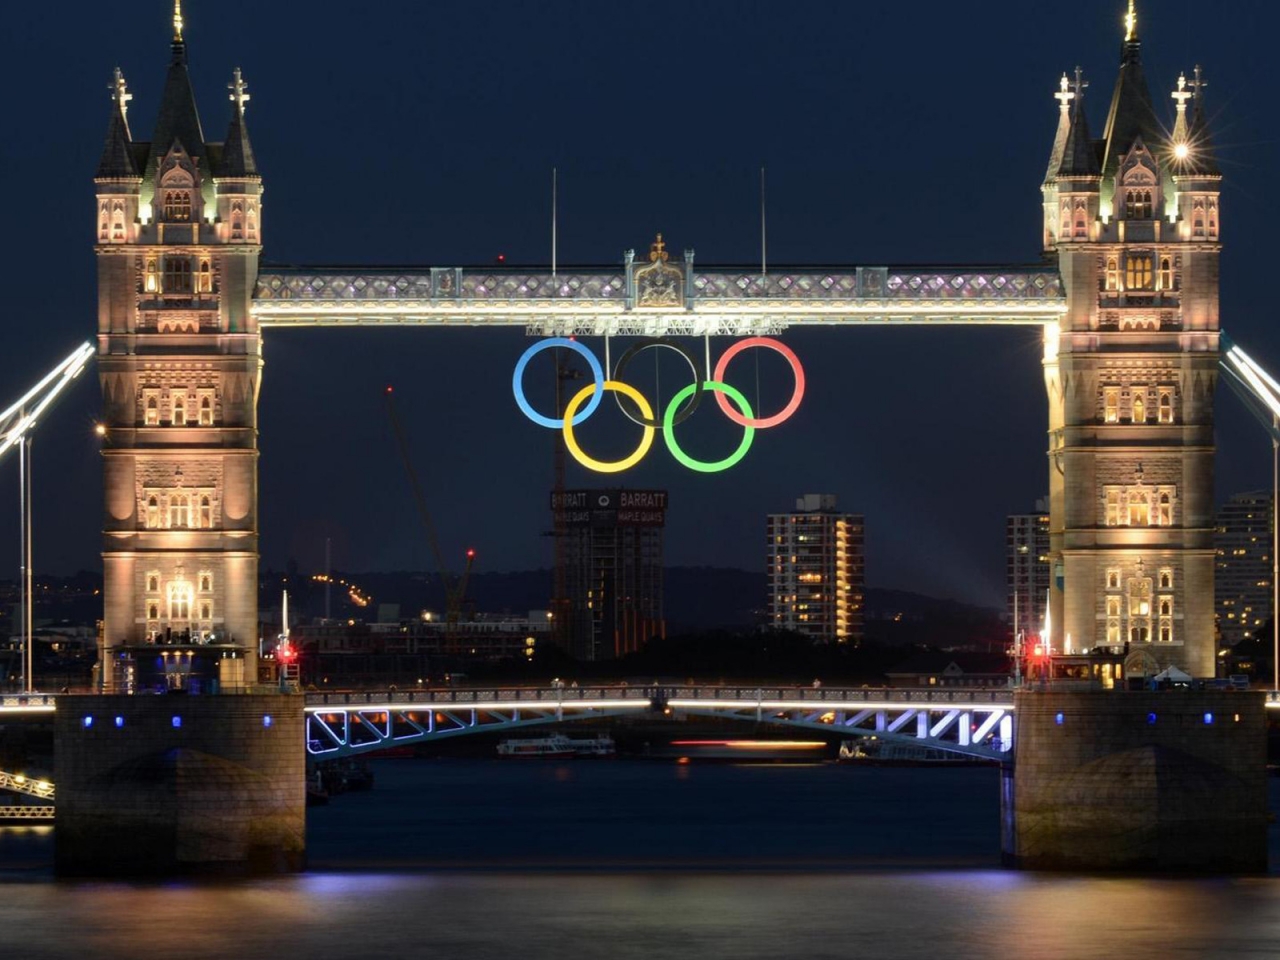 London Bridge 2012 Olympics for 1280 x 960 resolution